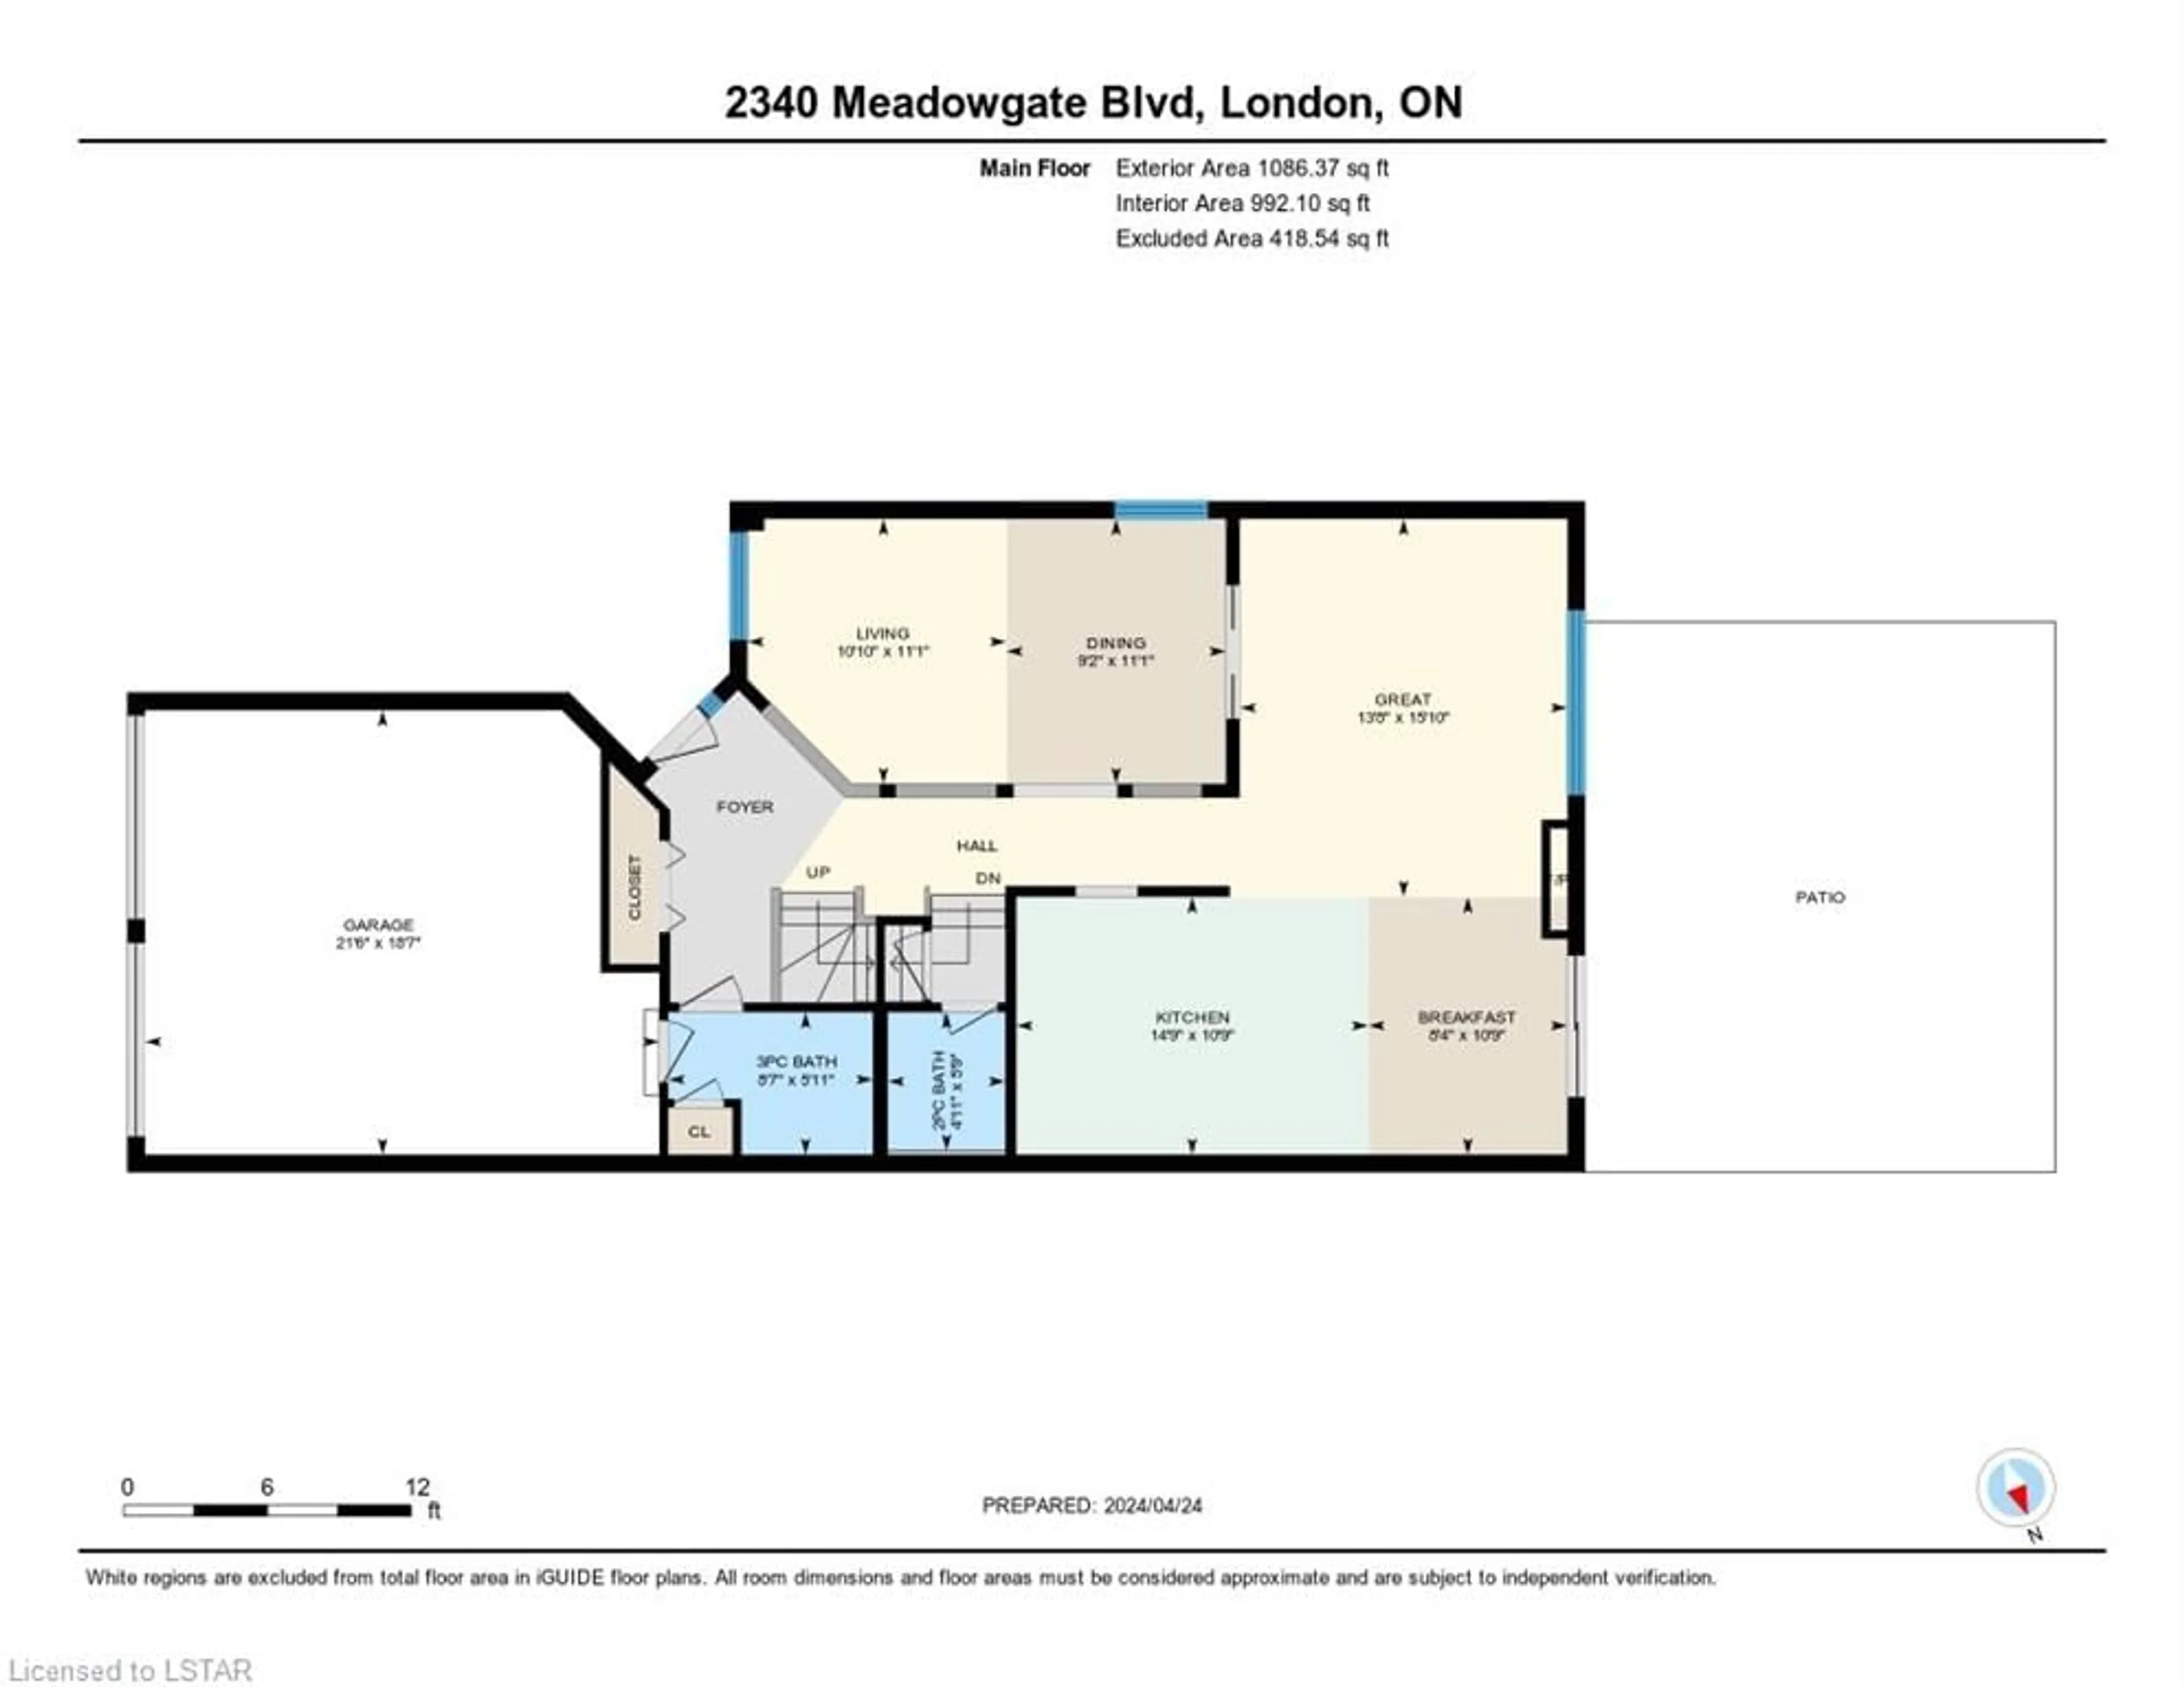 Floor plan for 2340 Meadowgate Blvd, London Ontario N6M 1L6